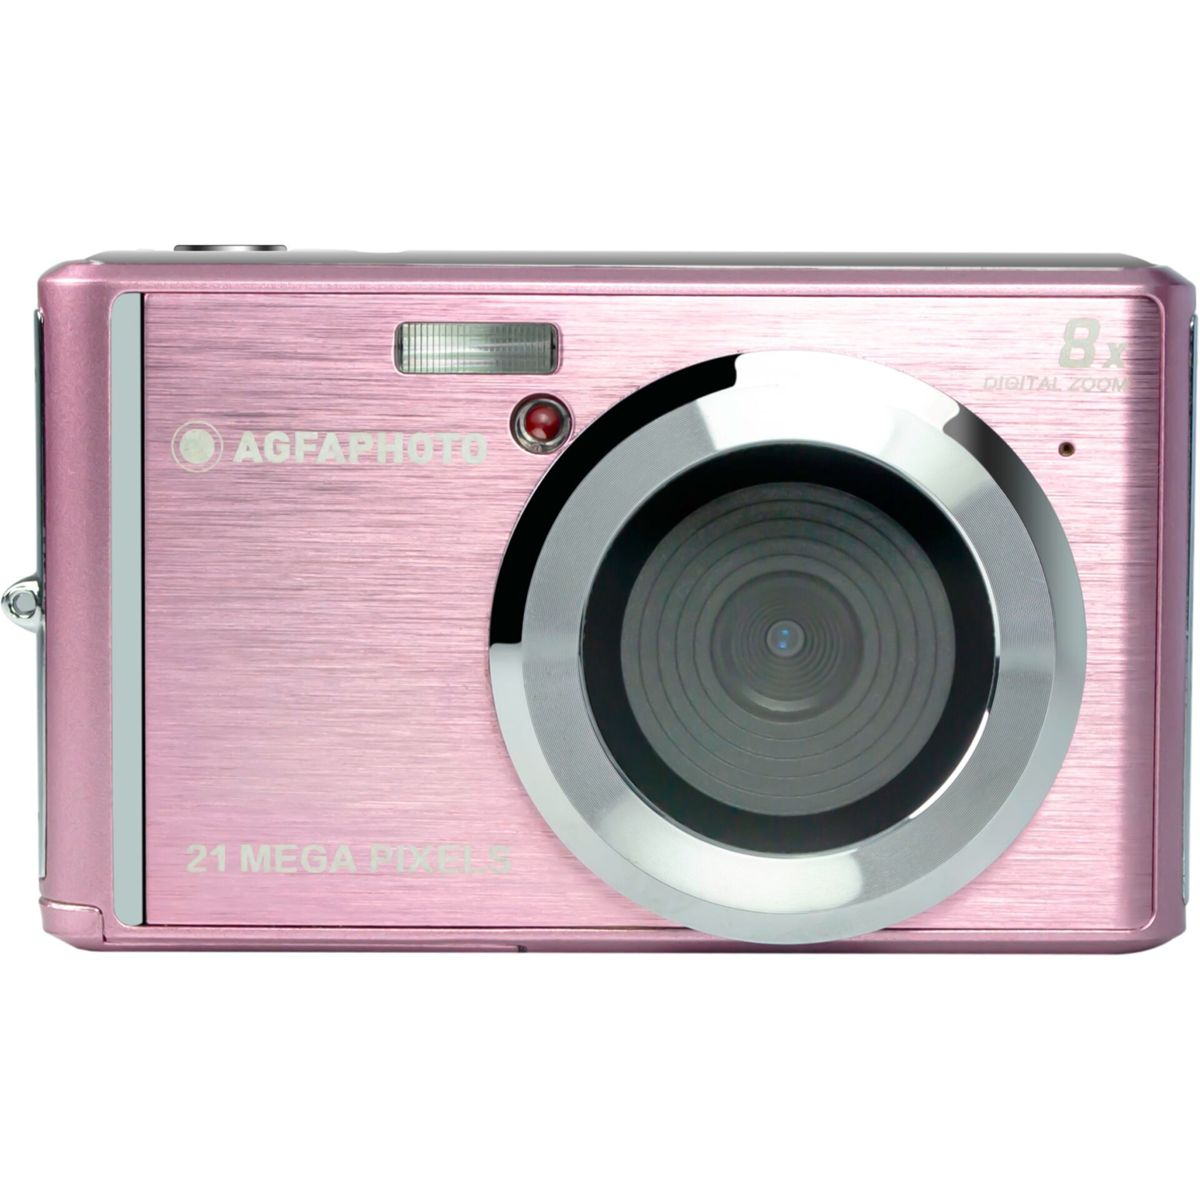 AGFAPHOTO Compact Cam DC5200 pink Digitalkamera pink